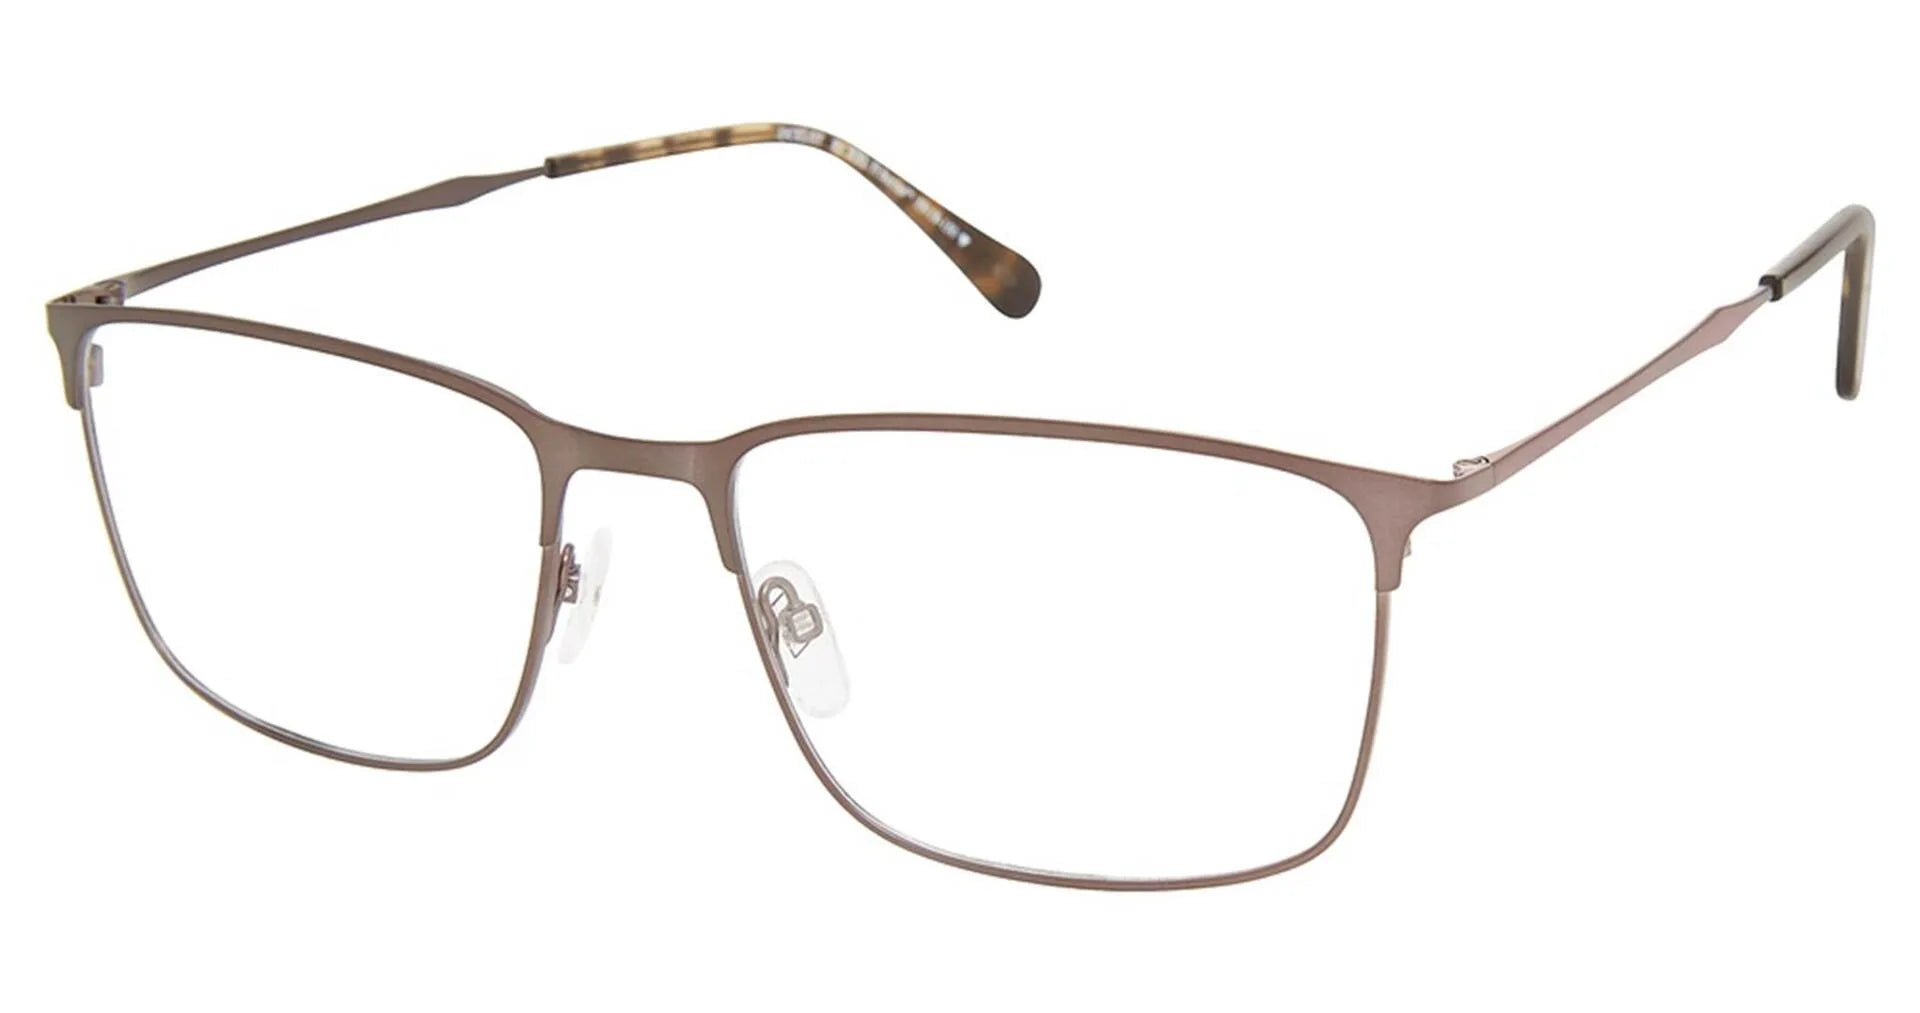 XXL Eyewear Ocelot Eyeglasses Brown